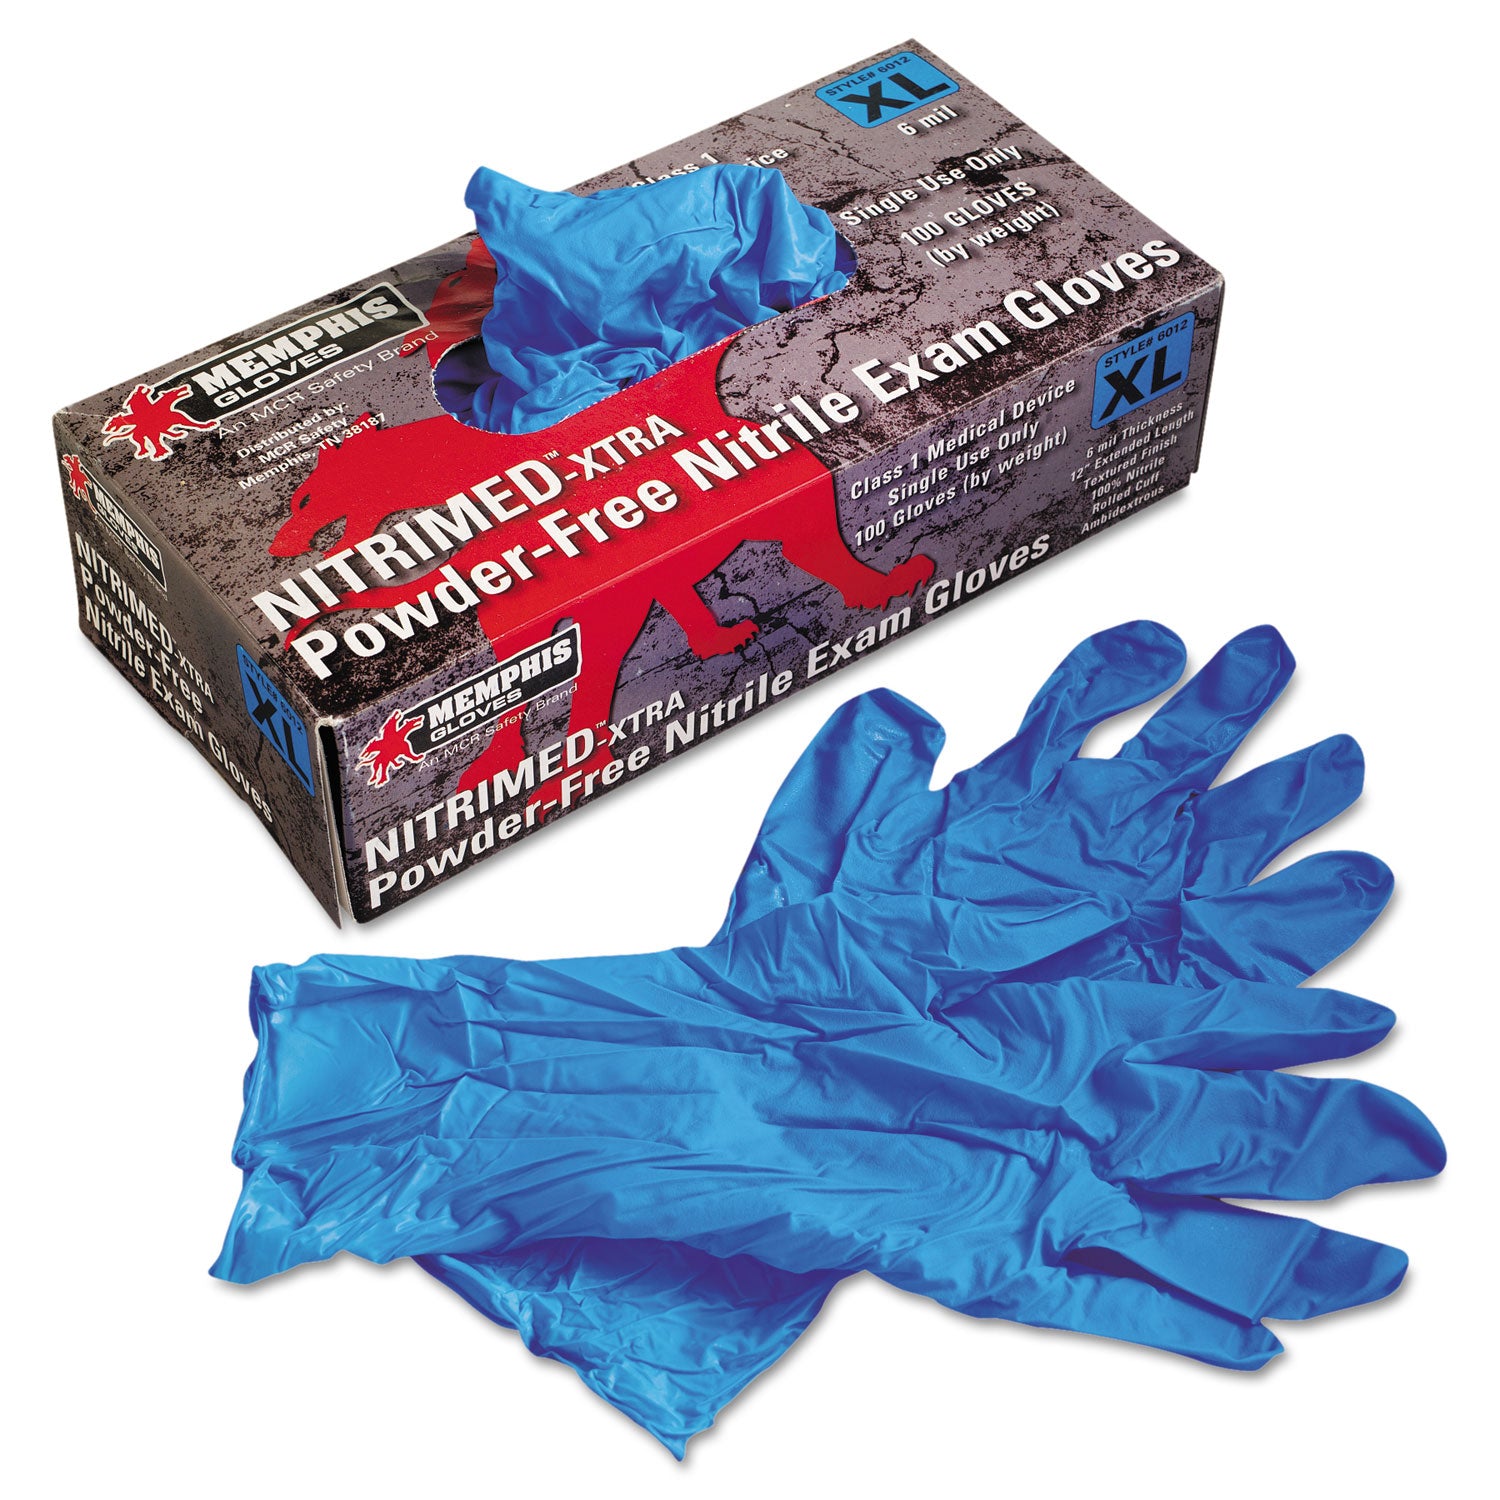 nitri-med-disposable-nitrile-gloves-blue-x-large-100-box_gn16012xl - 1